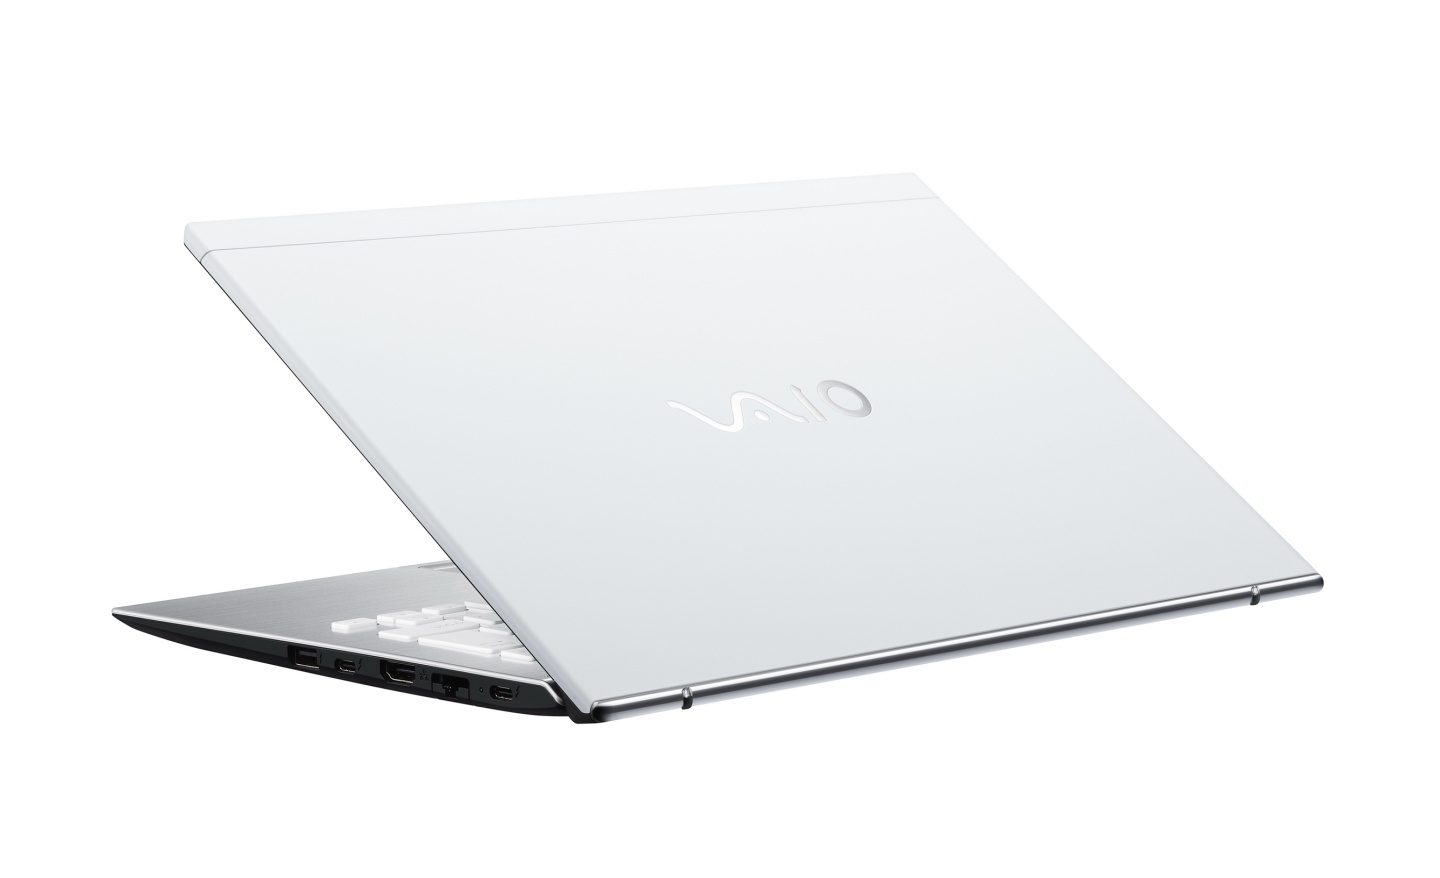 VAIO 新款 SX14 筆電正式登臺！搭載第 11 代 Intel Core i7 處理器，並同步推出全新『 勝色 』